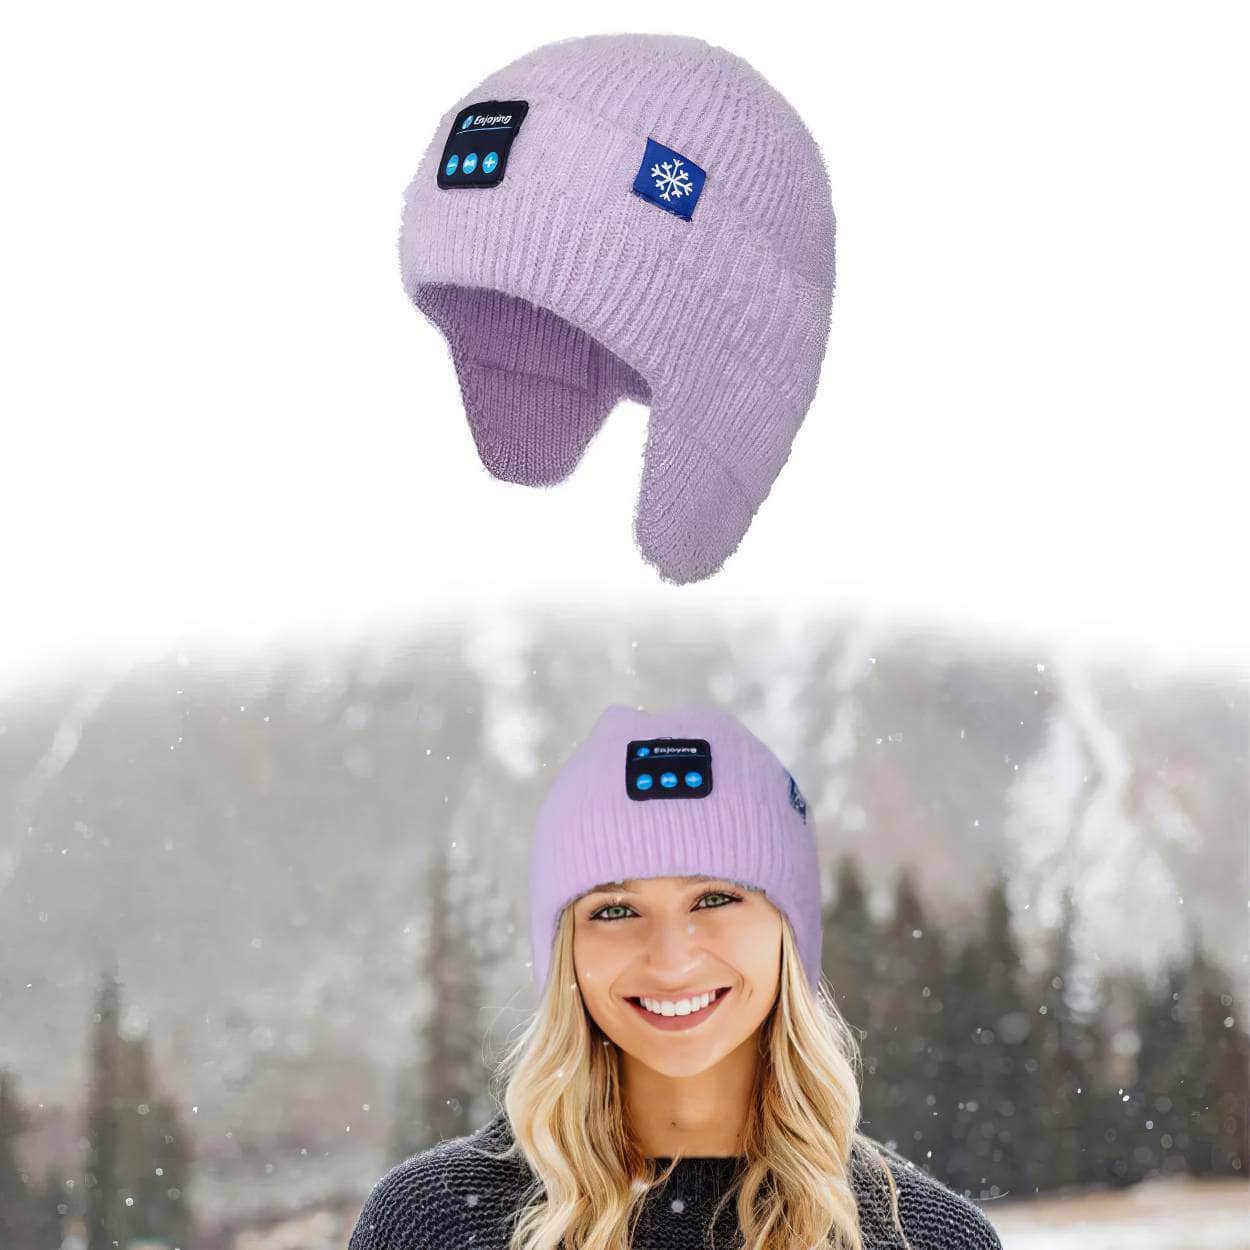 Bluetooth Beanie Hat with Wireless Headphones - Winter Knit Hat for Men and Women, Ear Flaps, Music Speaker, Outdoor Walking Cap in Purple